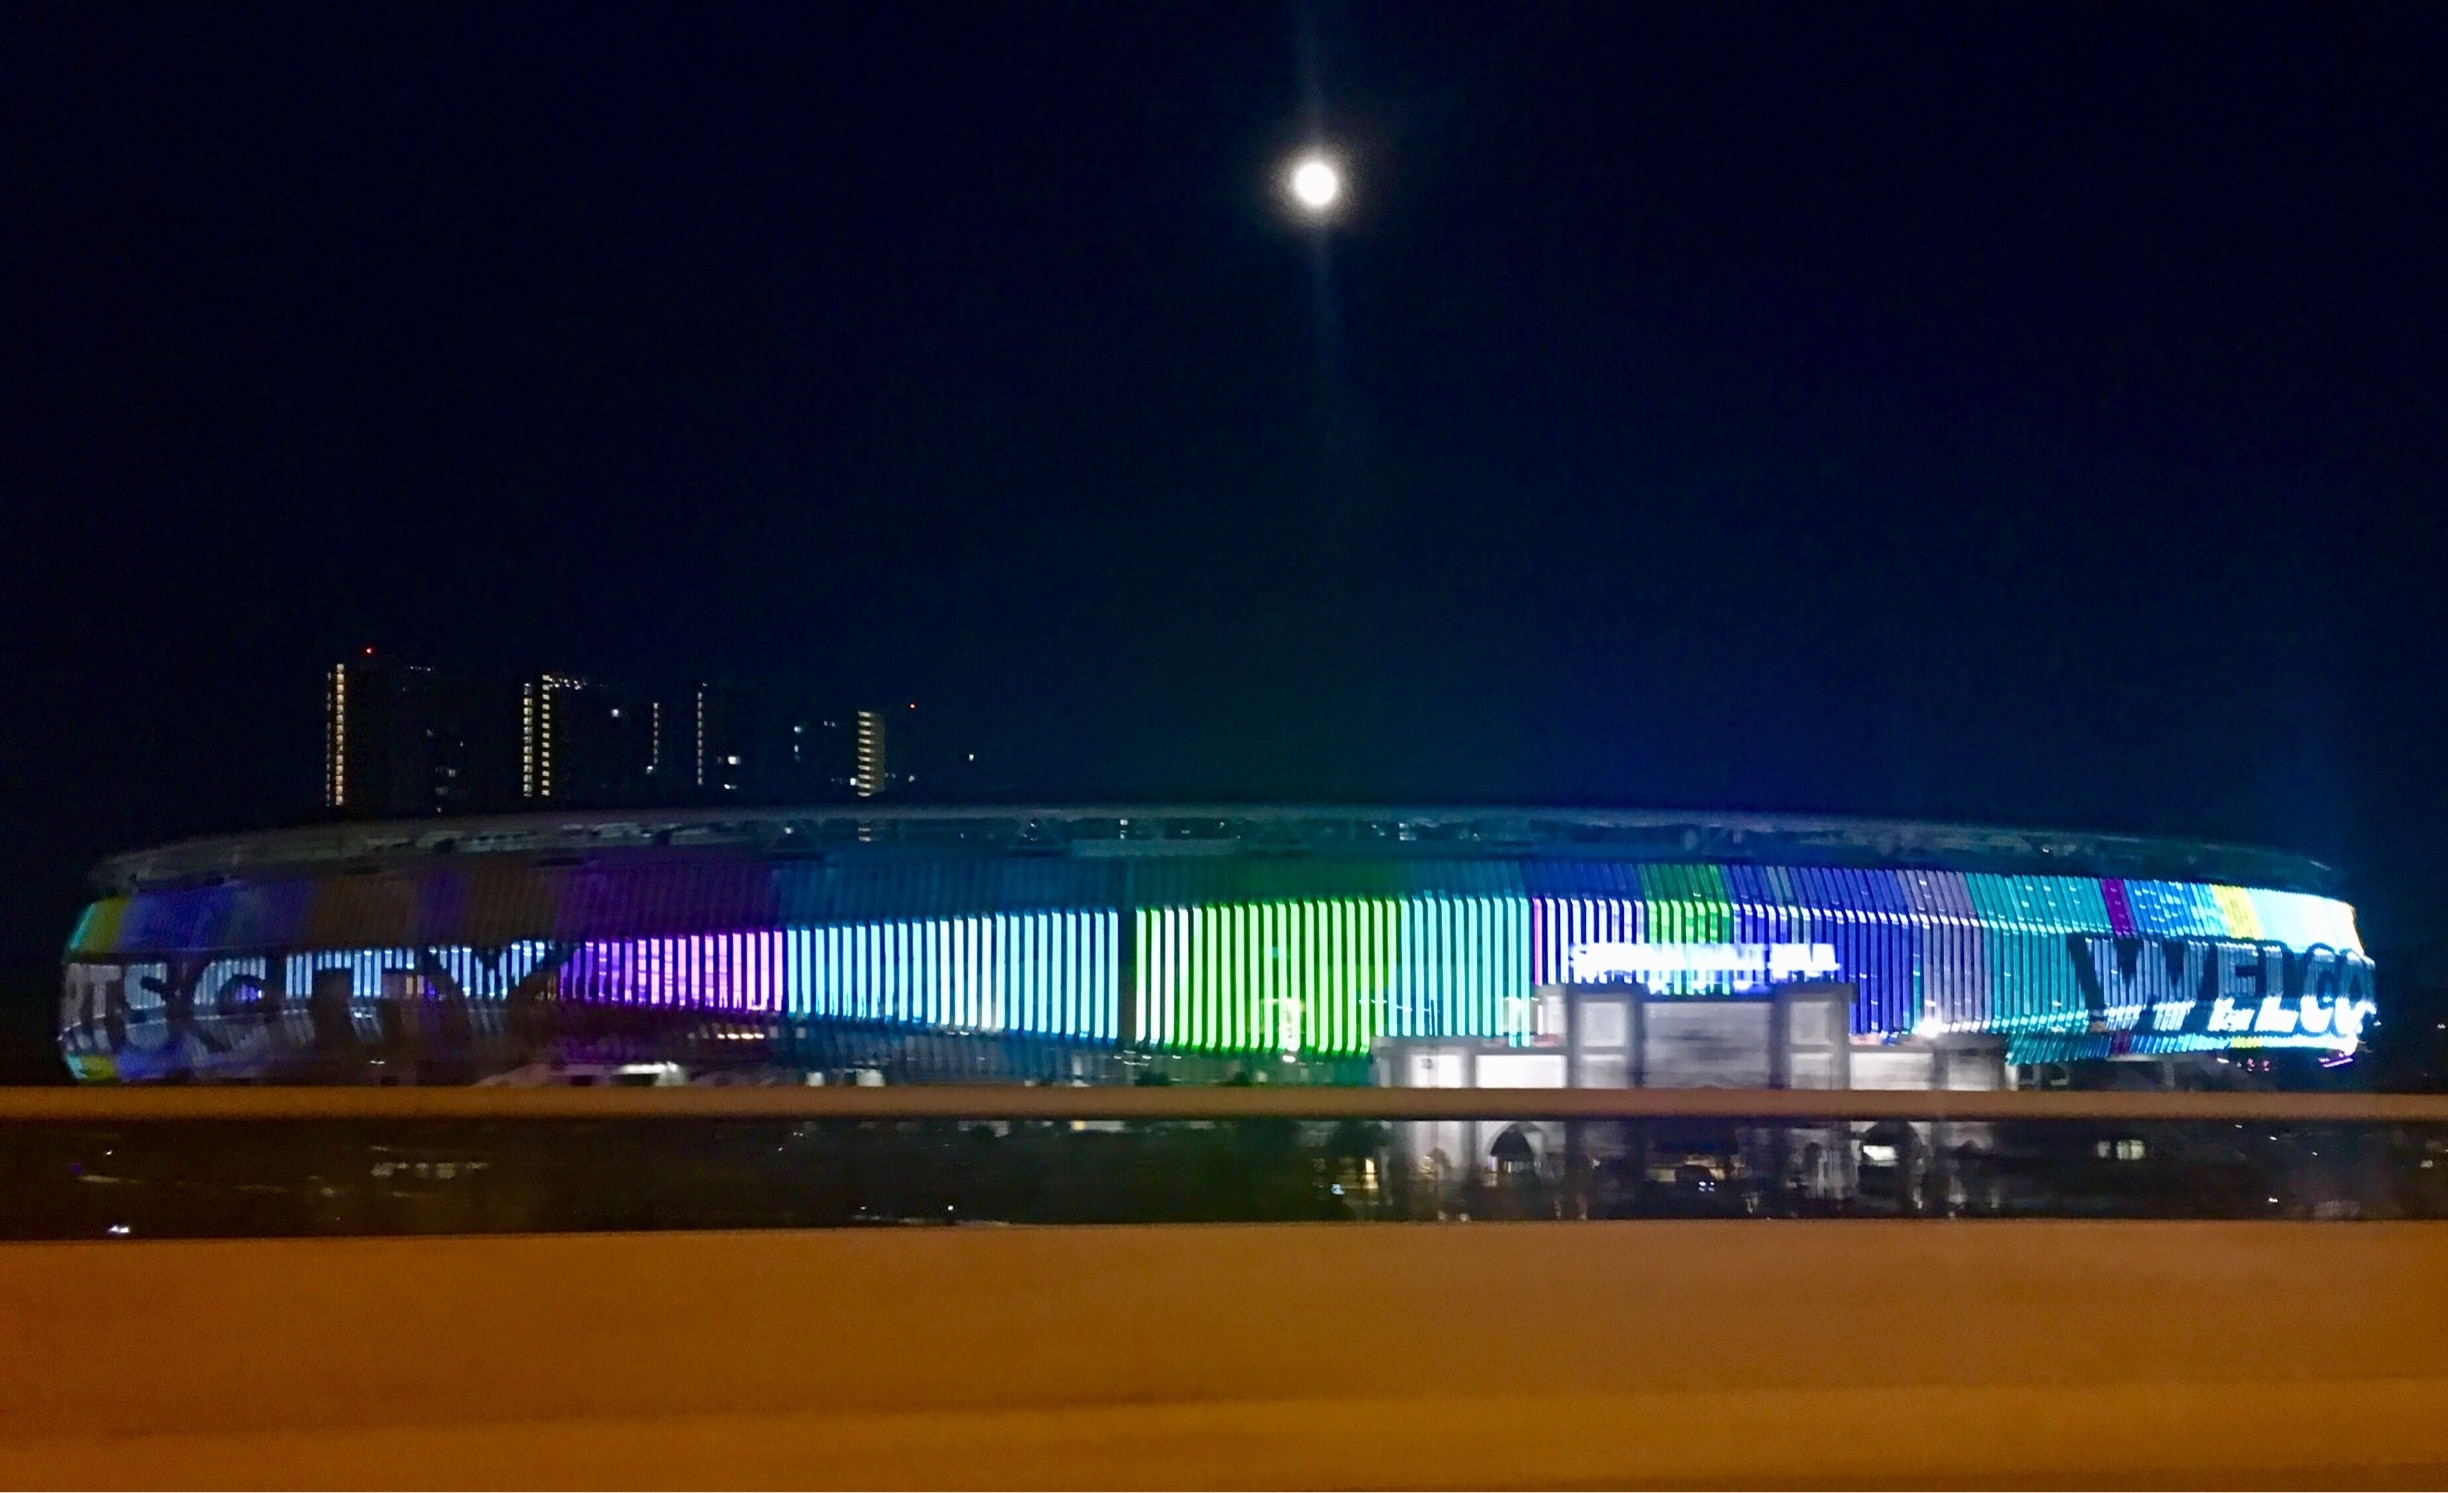 The playful display of colourful LED lights illuminate KL Sports City as the full moon illuminates the sky above it. #klsportscity.my #stadium_bukitjalil #dusk #led display #led #kualalumpur #malaysia #travelblogger #mariadasstheworld